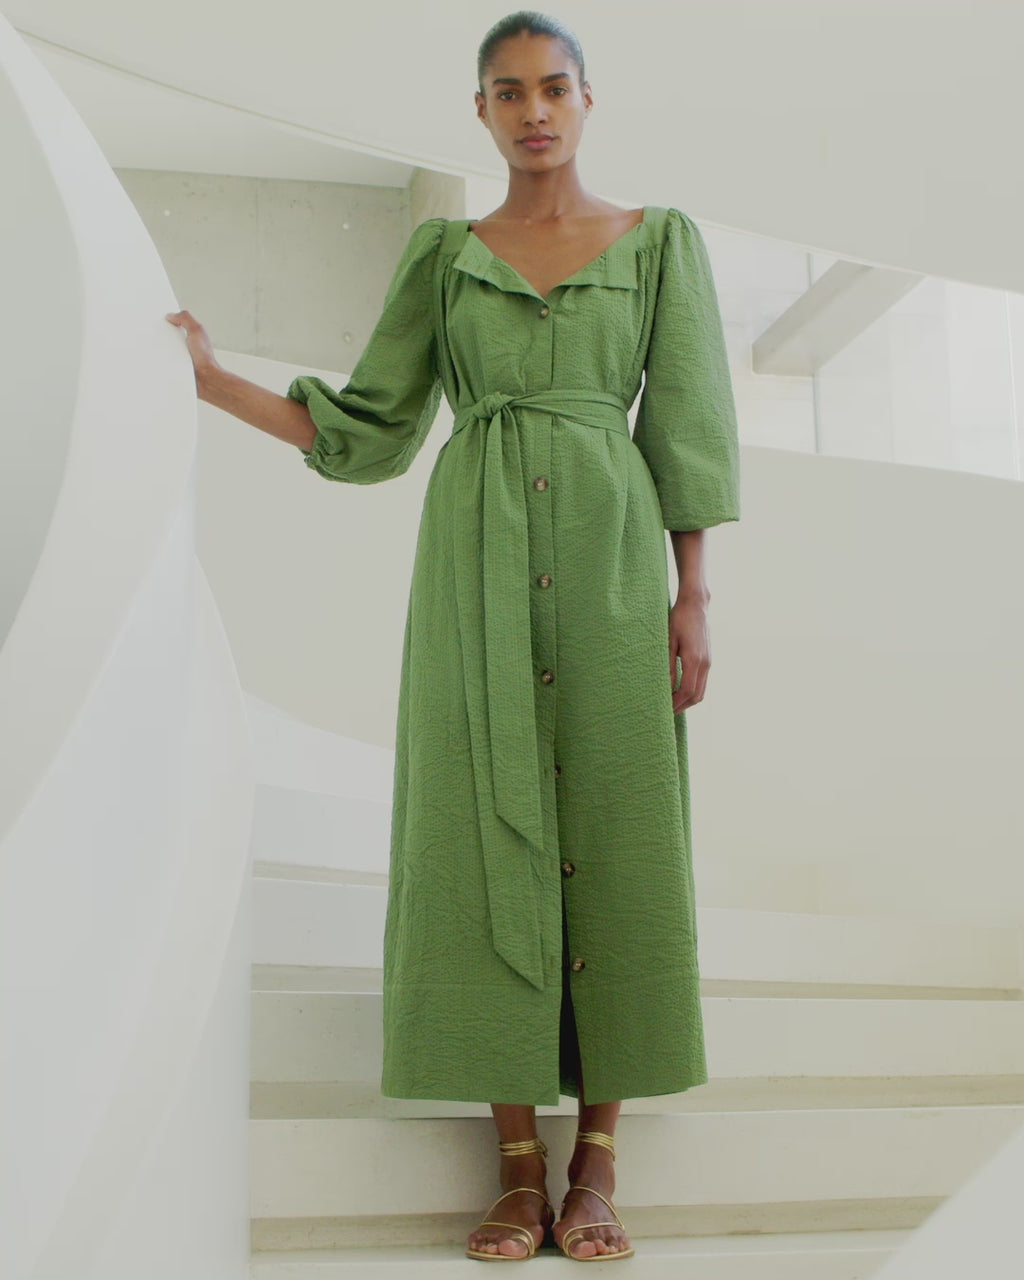 Wiggy Kit | Square Neck Dress (Green Seersucker) | Video of model wearing maxi green dress with long sleeves